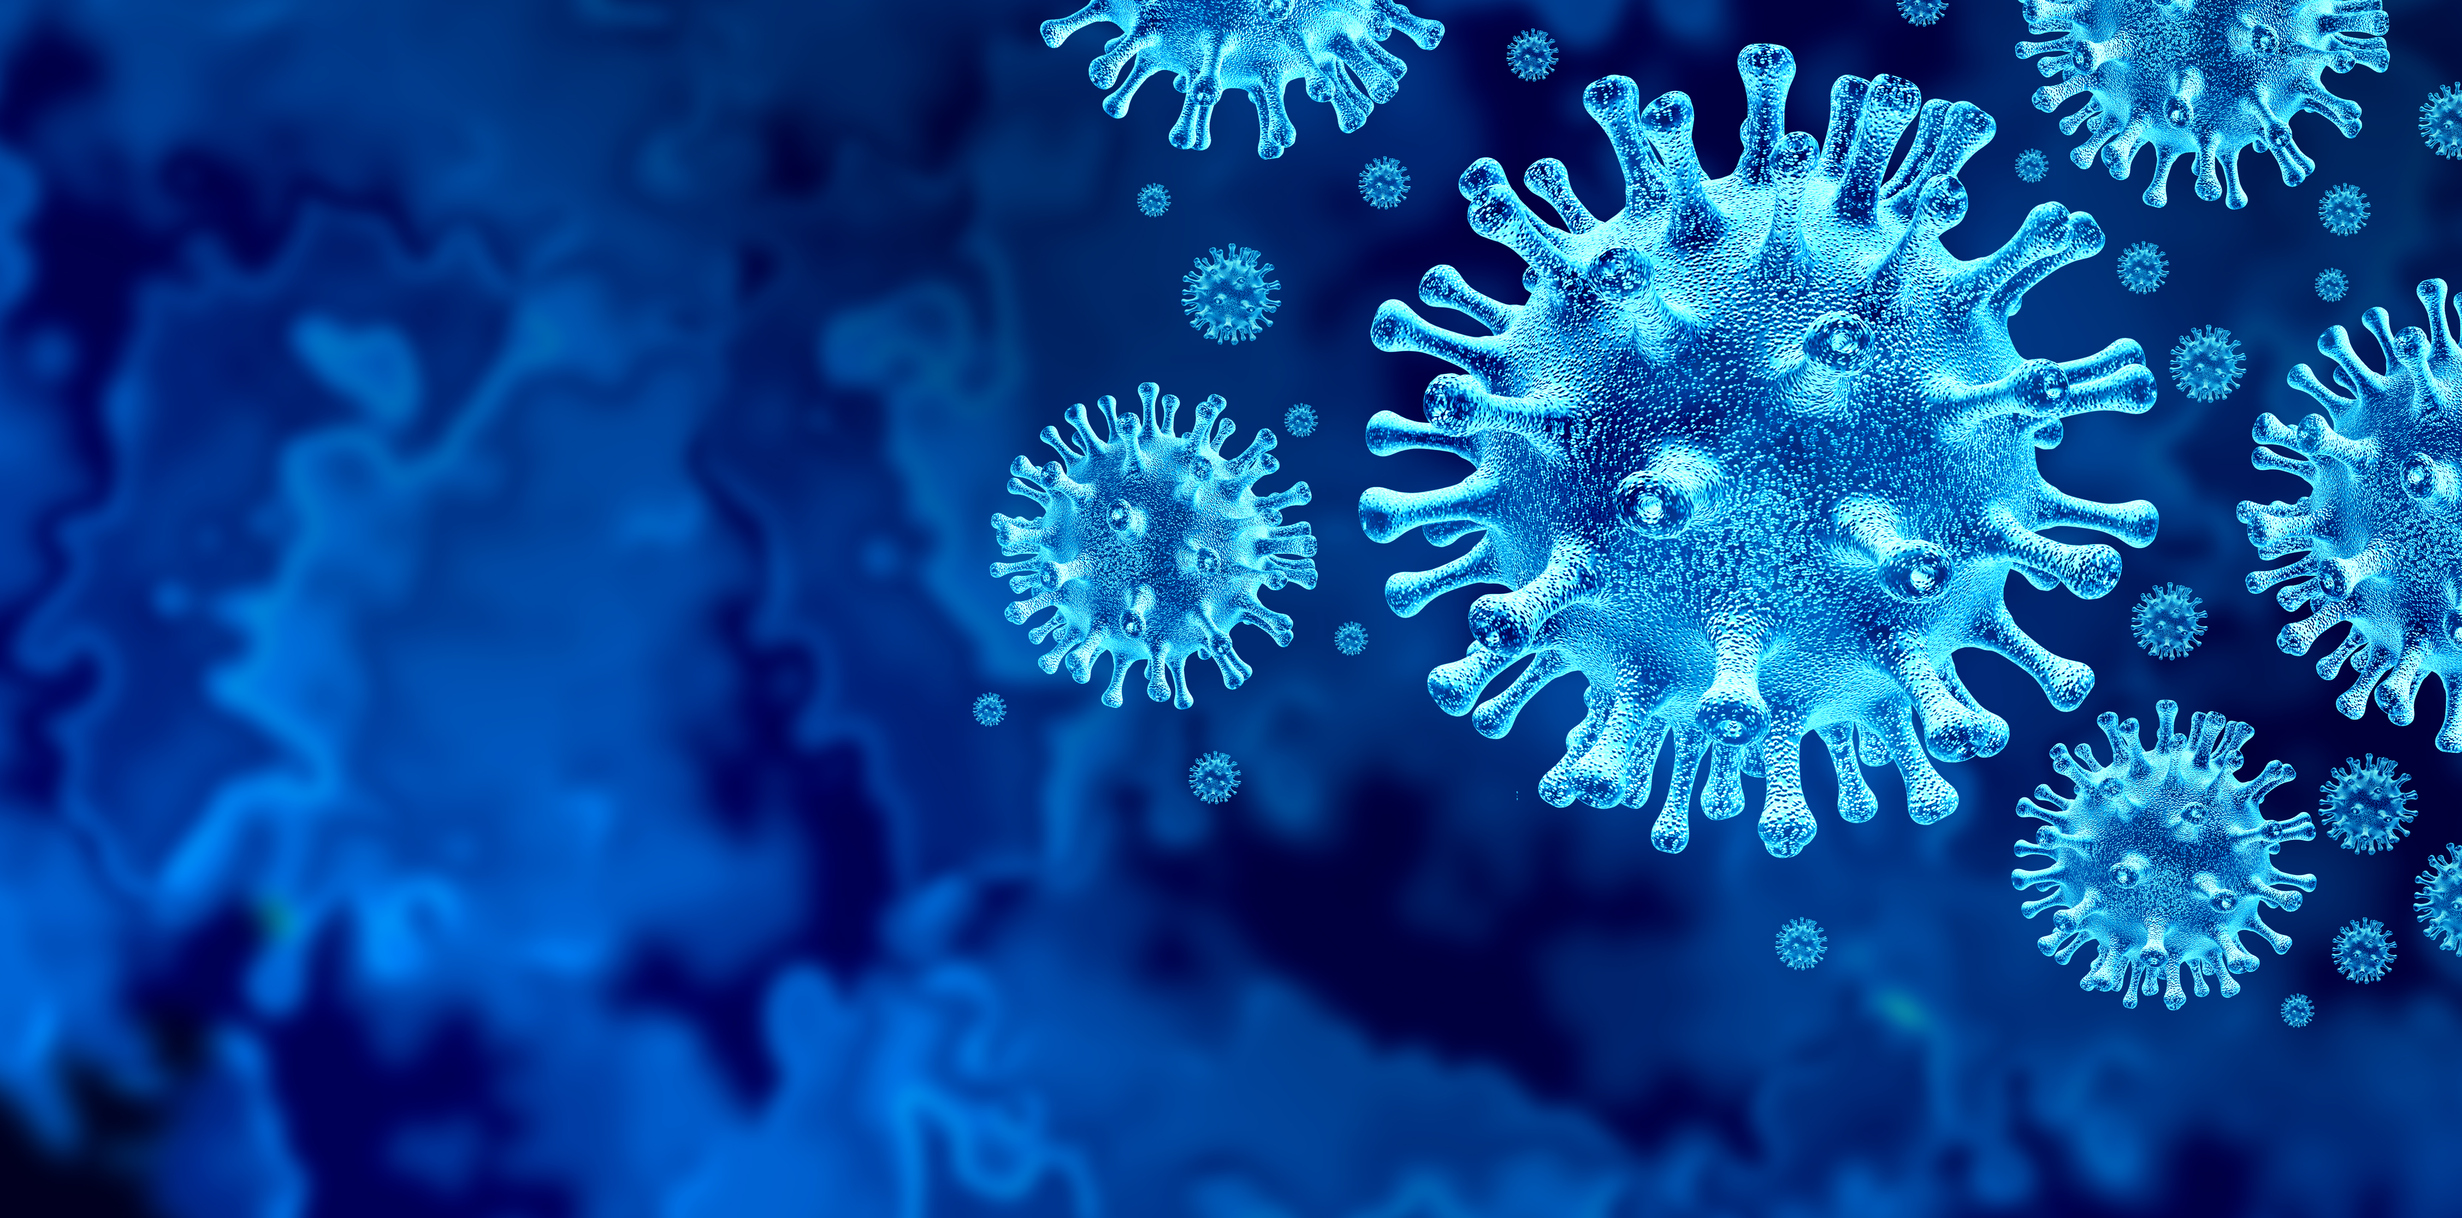 How is Coronavirus impacting the events industry?